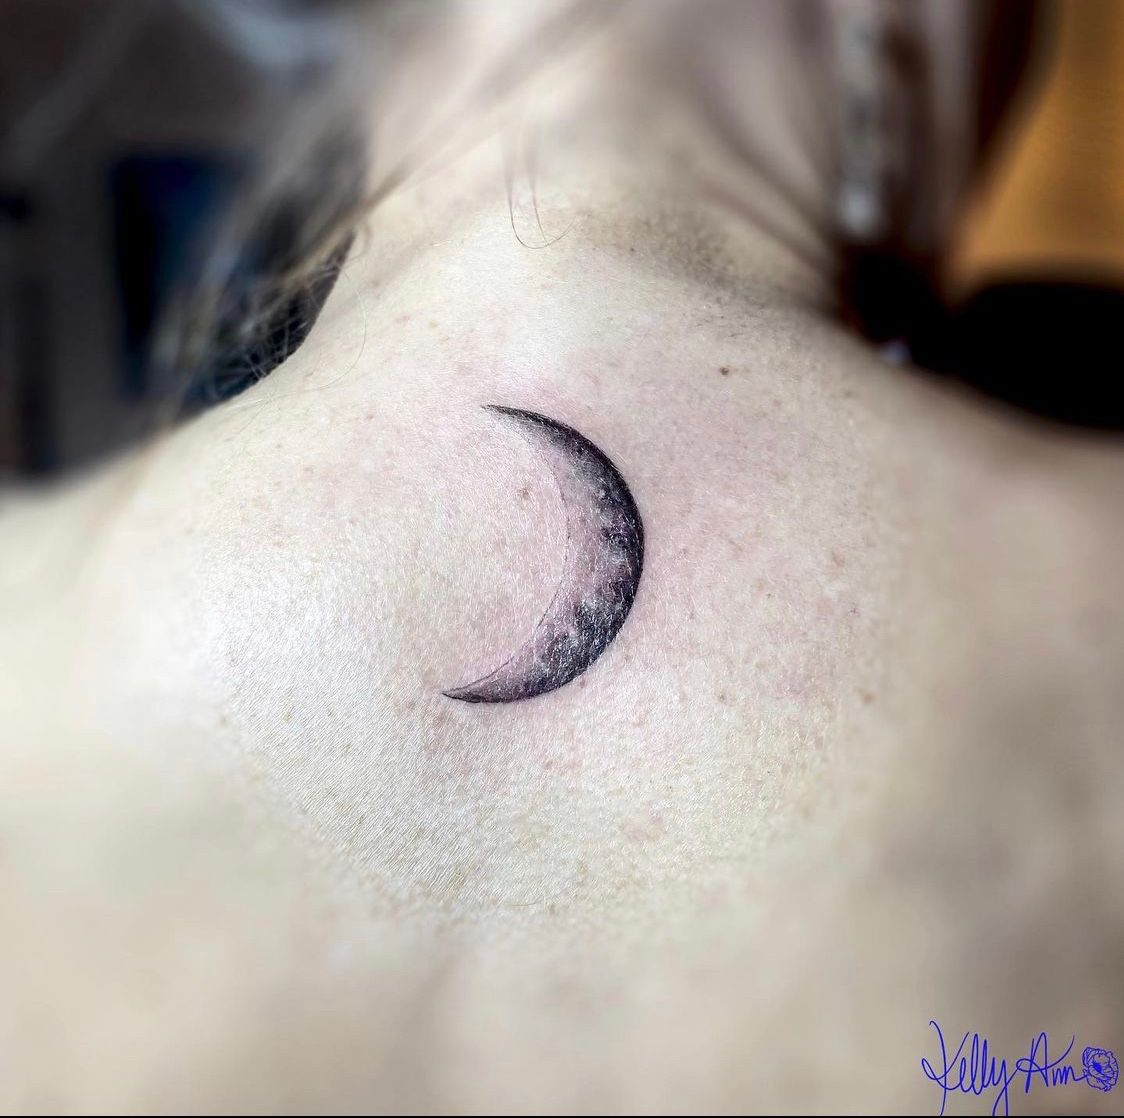 Crescent moon wrist tattoo by Shina361 on DeviantArt